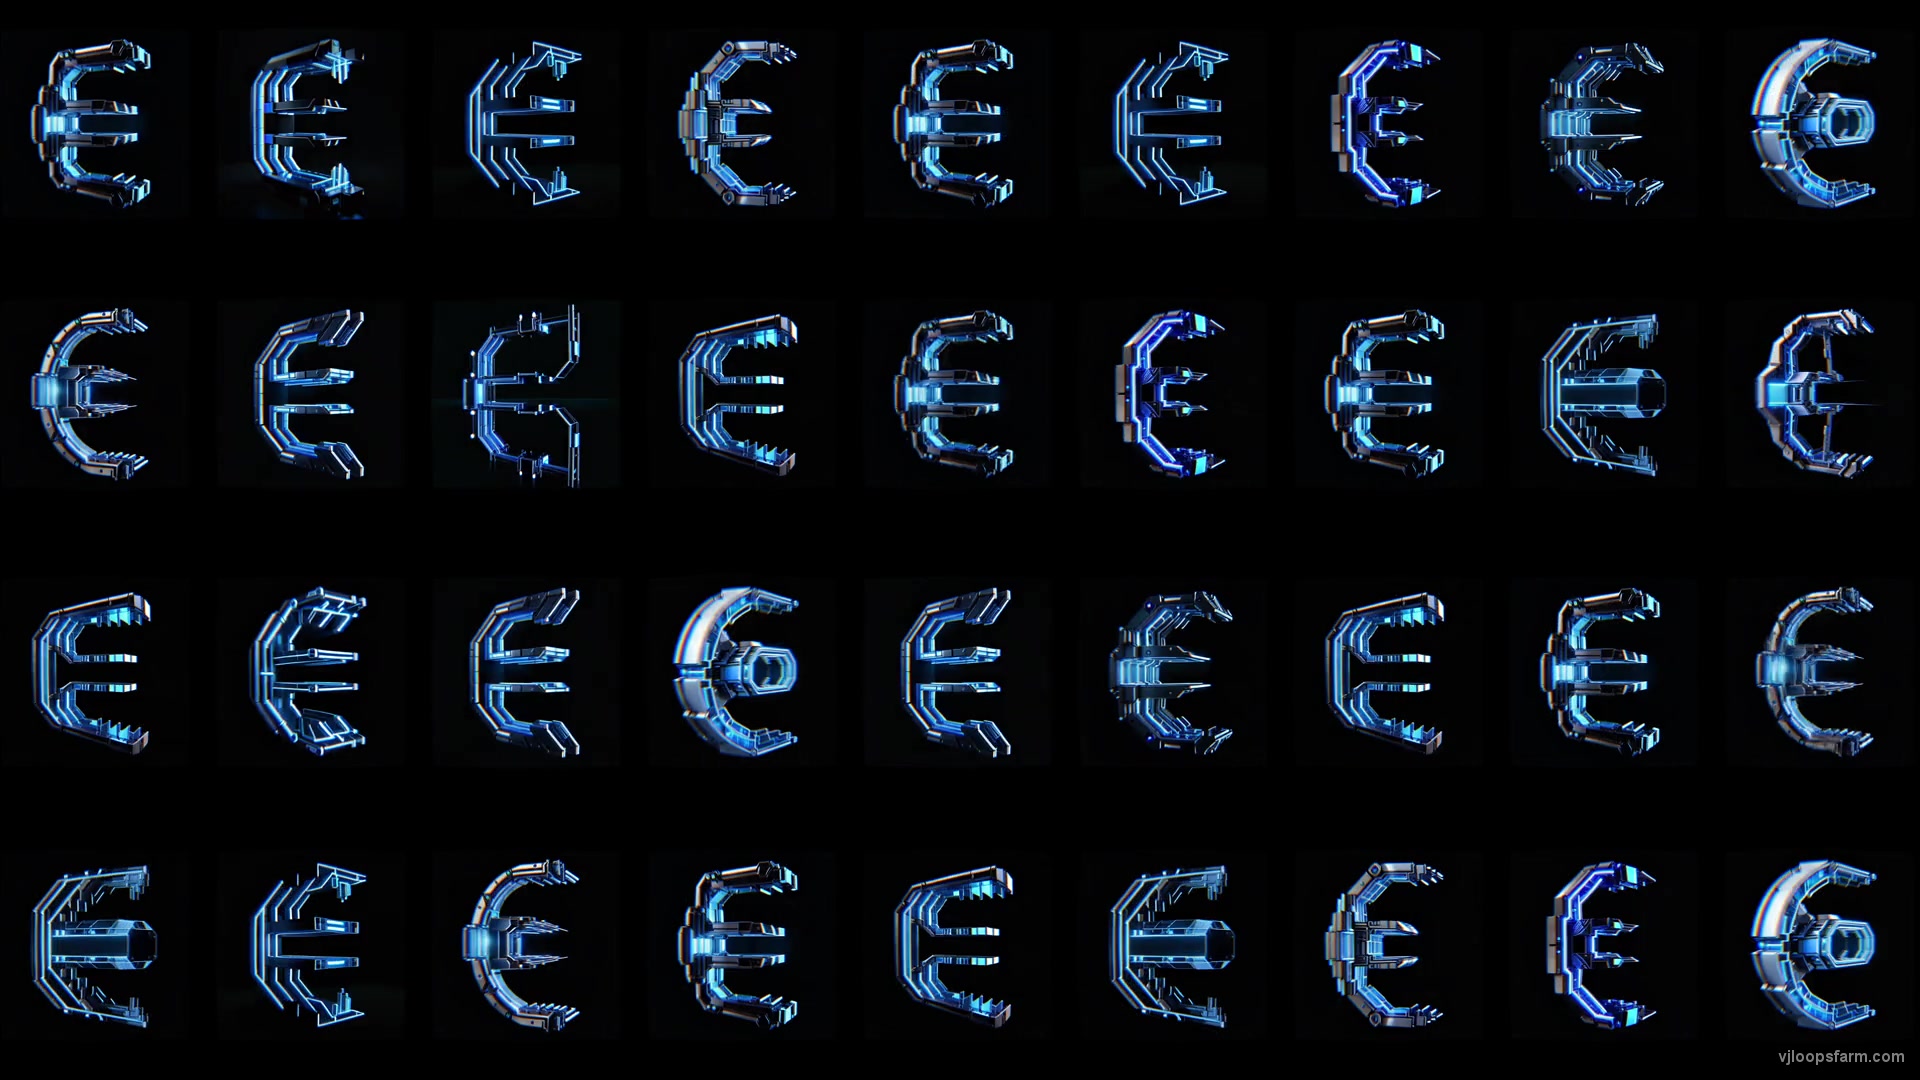 Cyberpunk EUR Currency Sign Pattern Random Motion Background